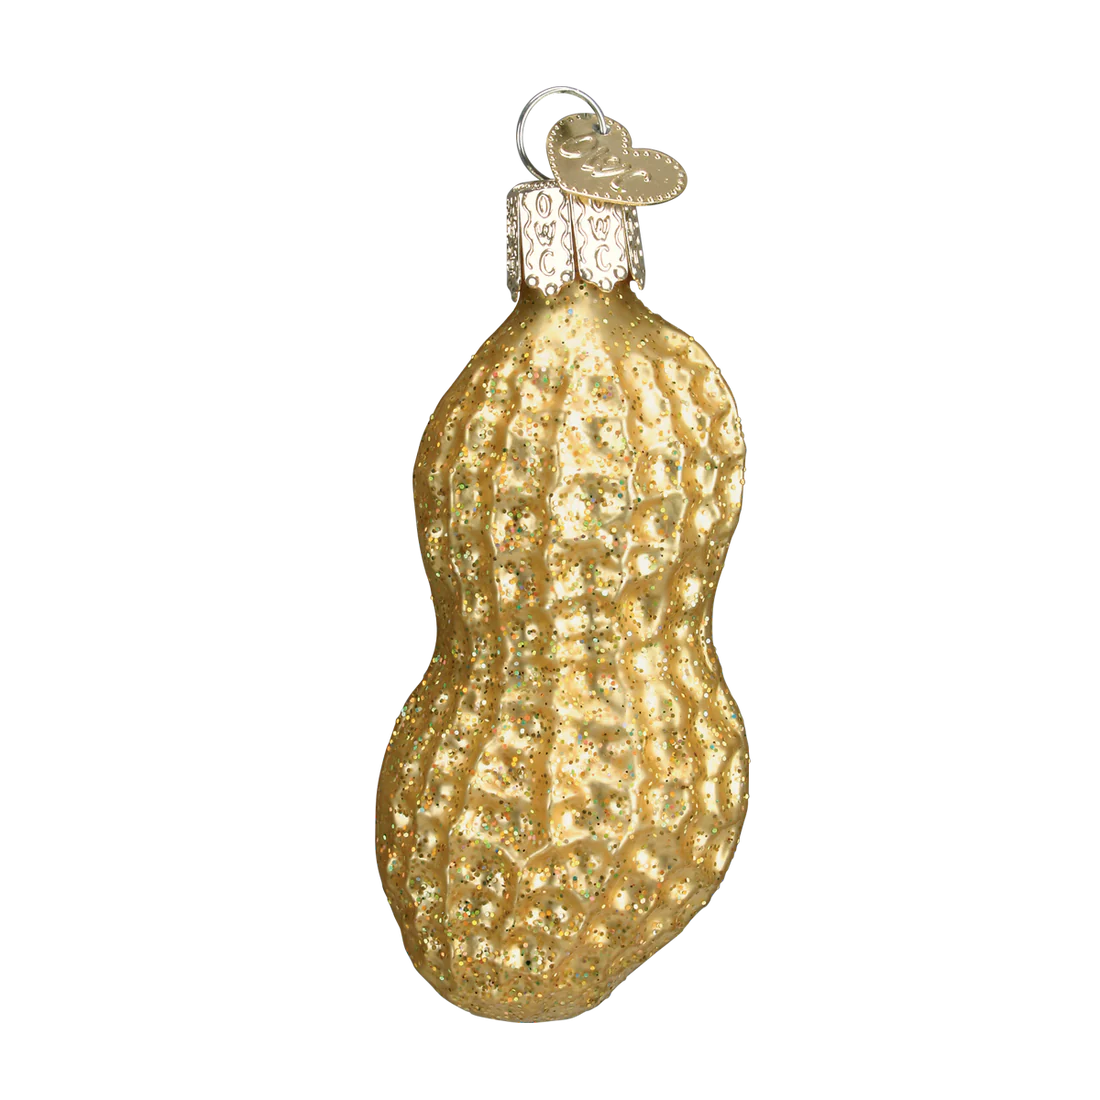 Peanut Ornament